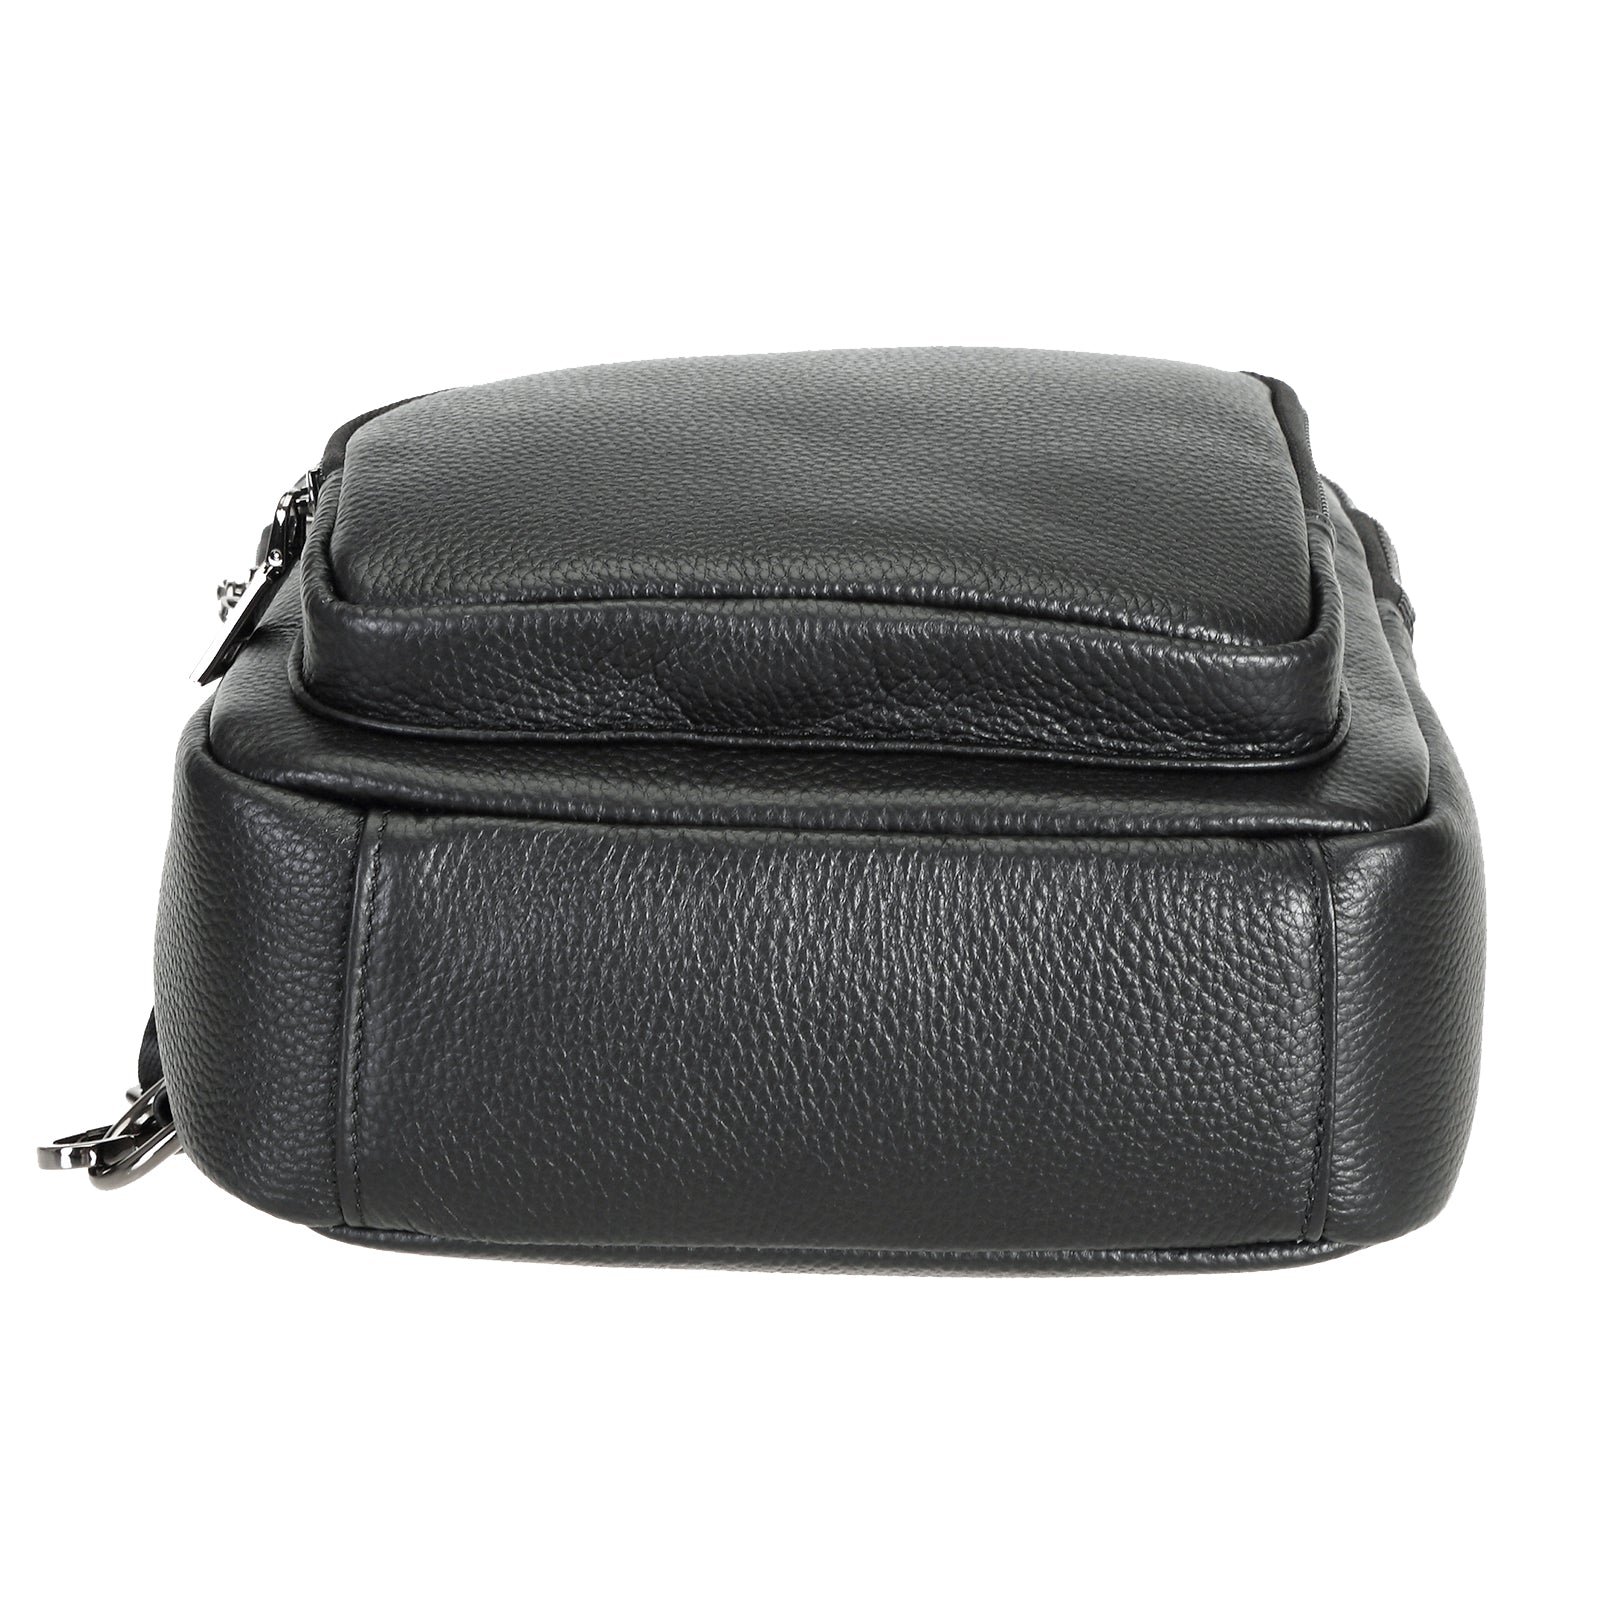 Polare Cowhide Leather Sling Bag Waterproof Crossbody Casual Daypack (Black,Bottom)